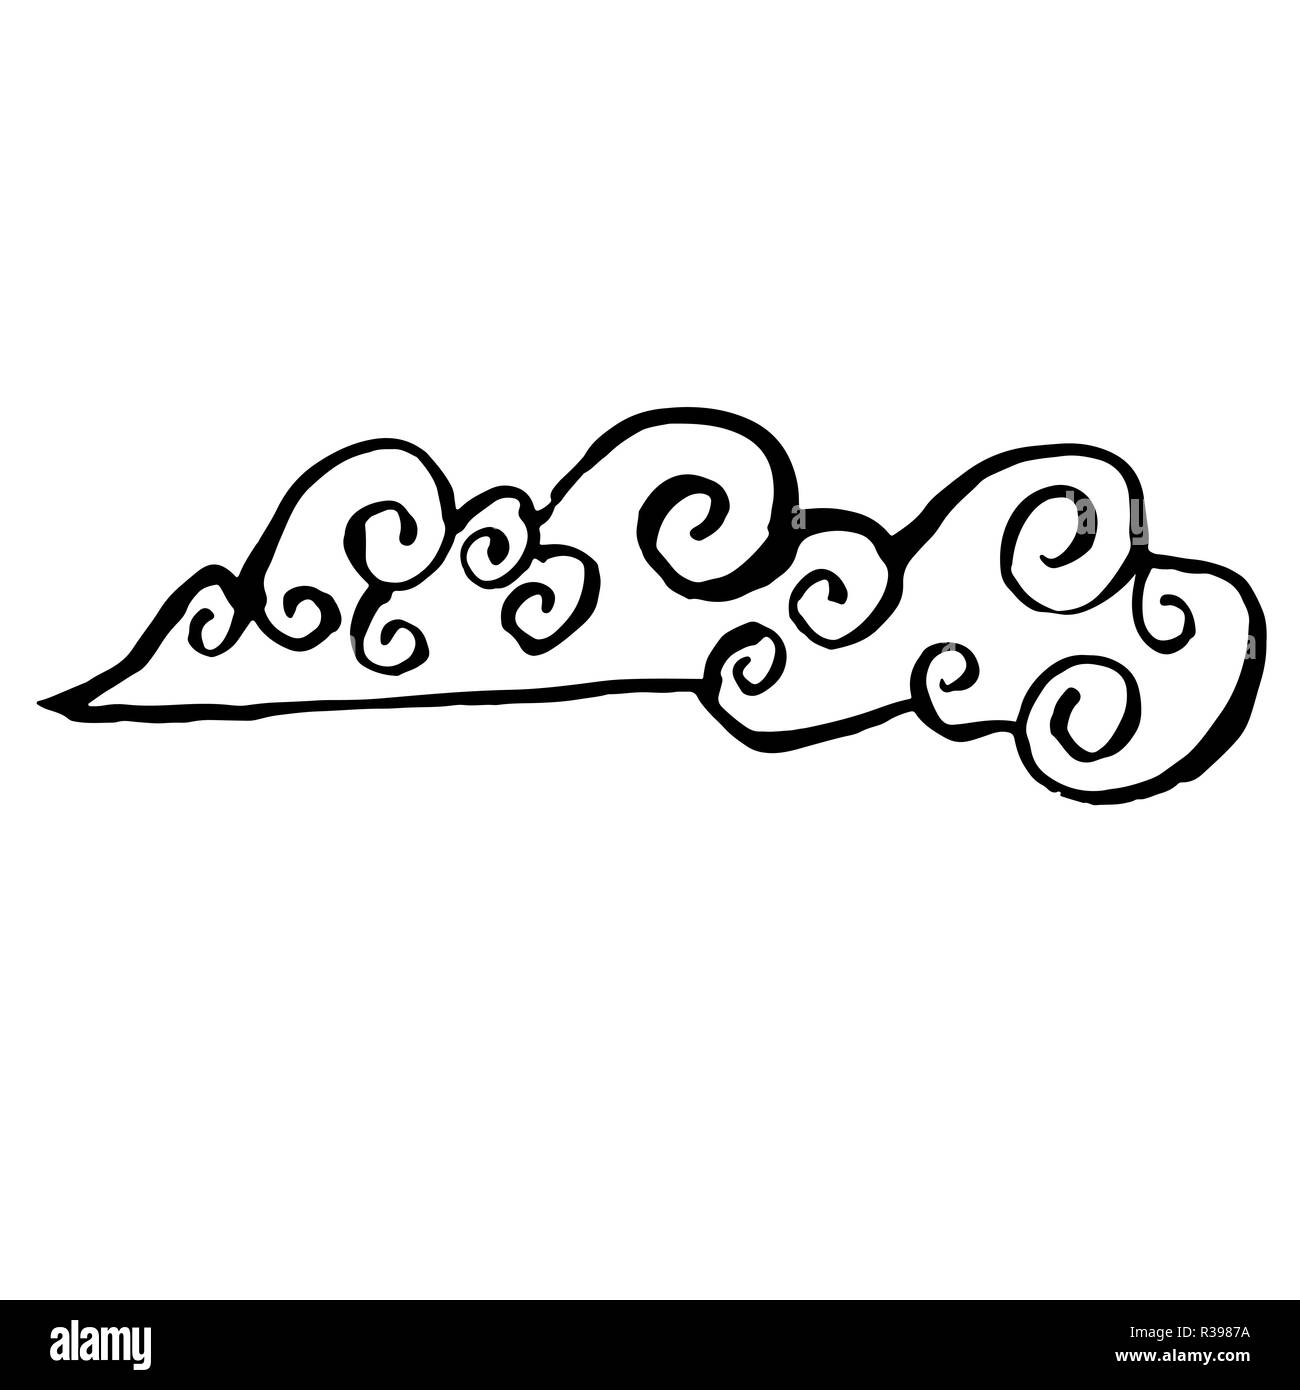 Brush cloud. Ink vector grunge illustration. Stock Vector